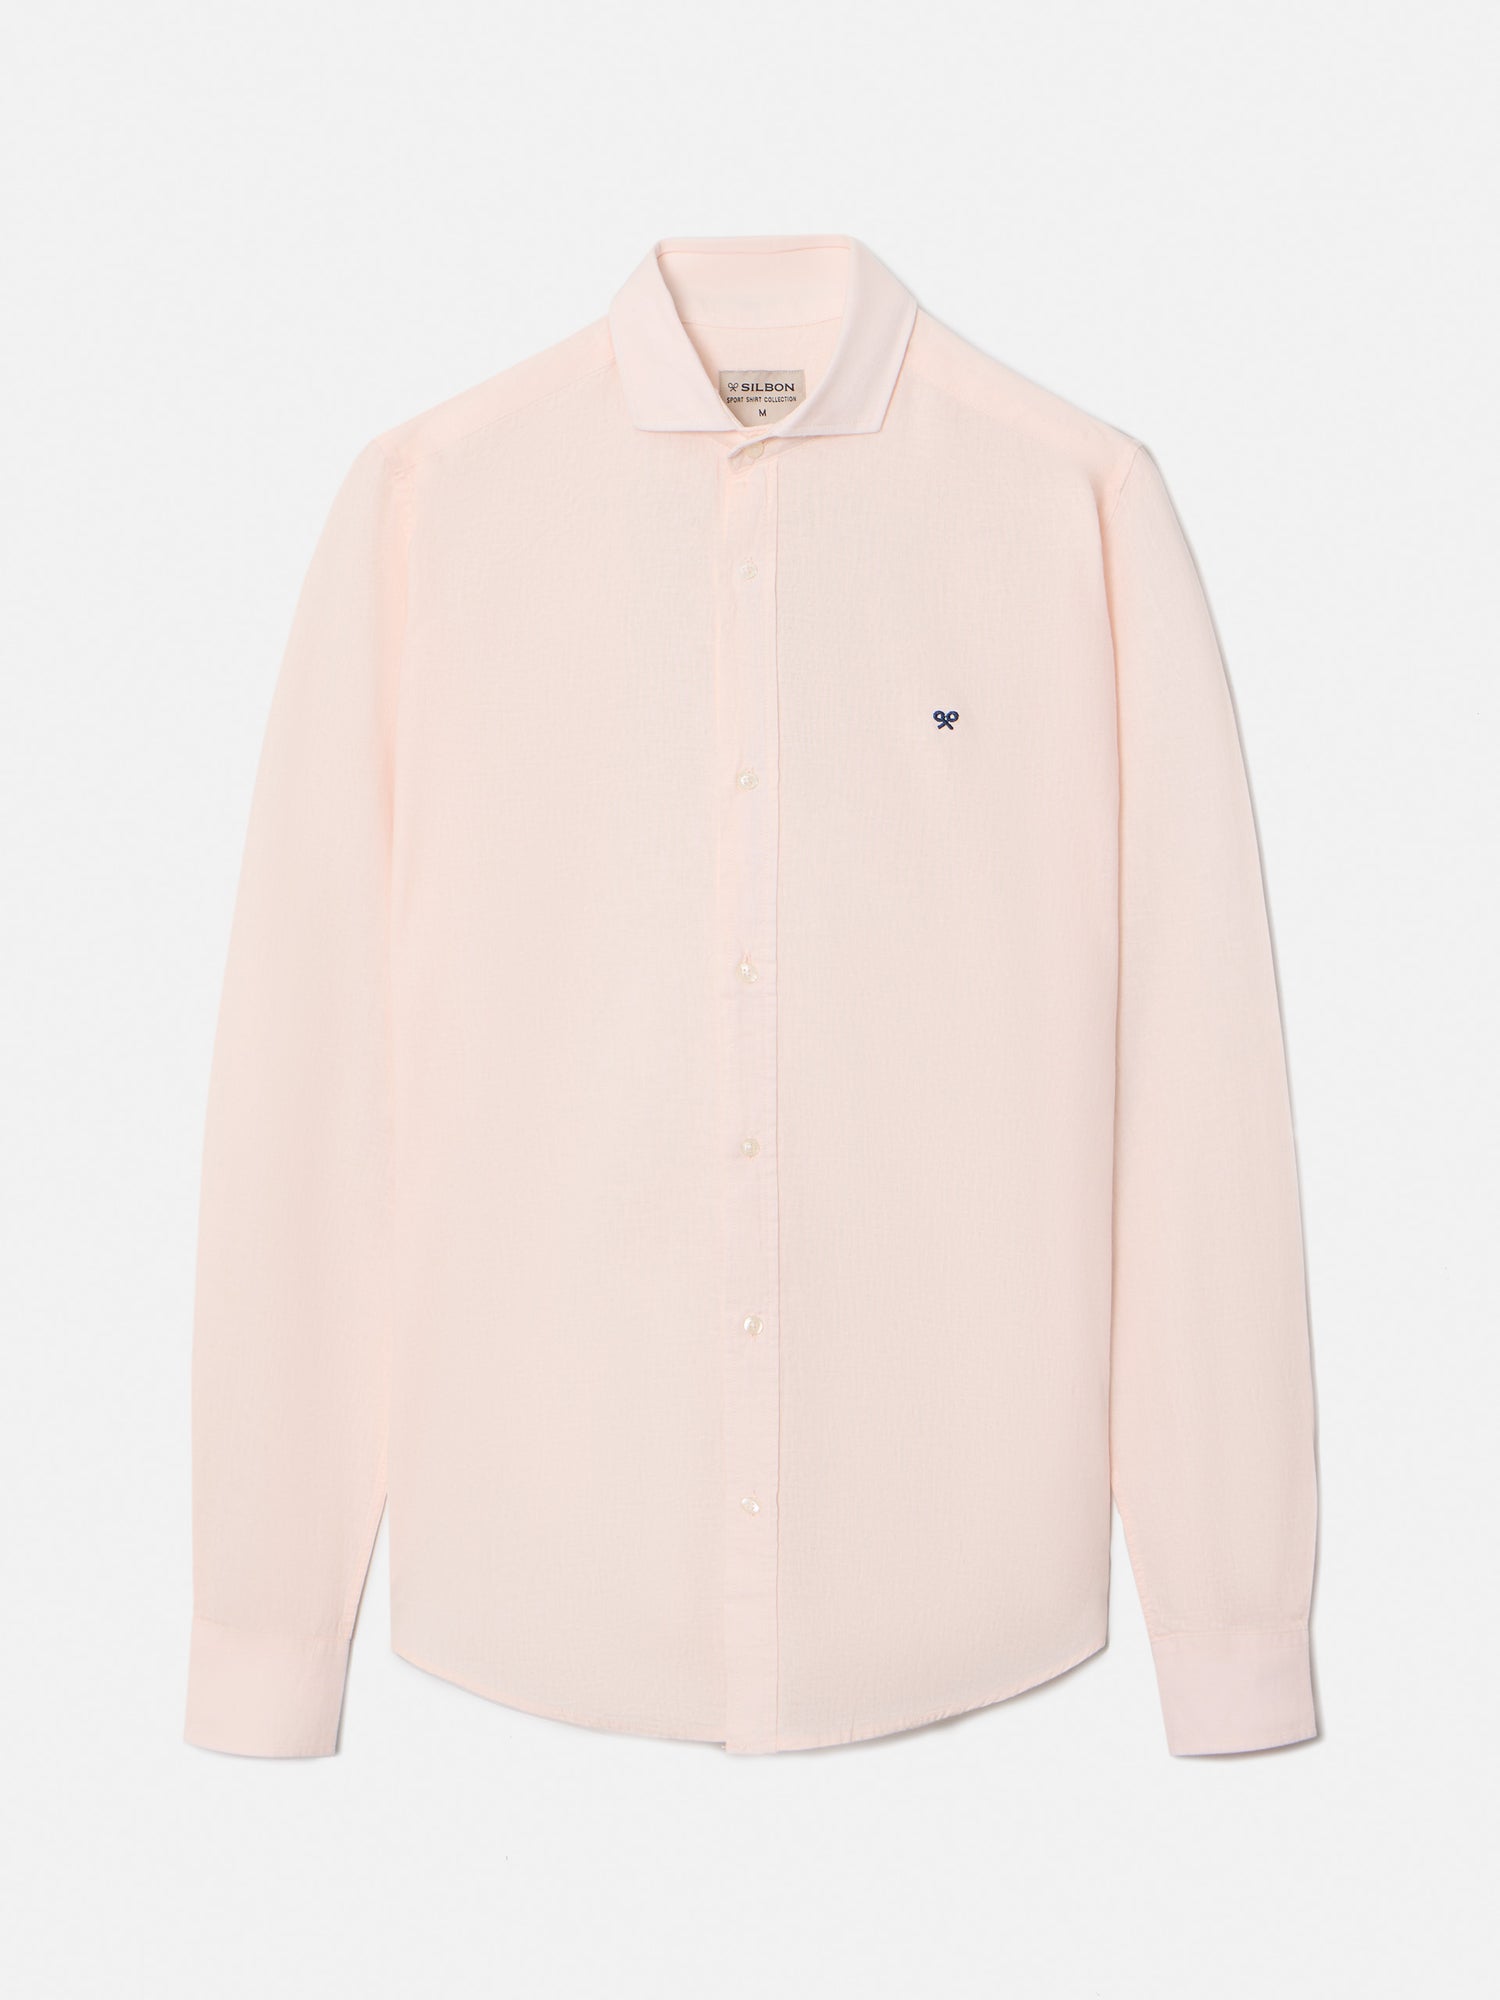 Camisa sport silbon soft rosa claro